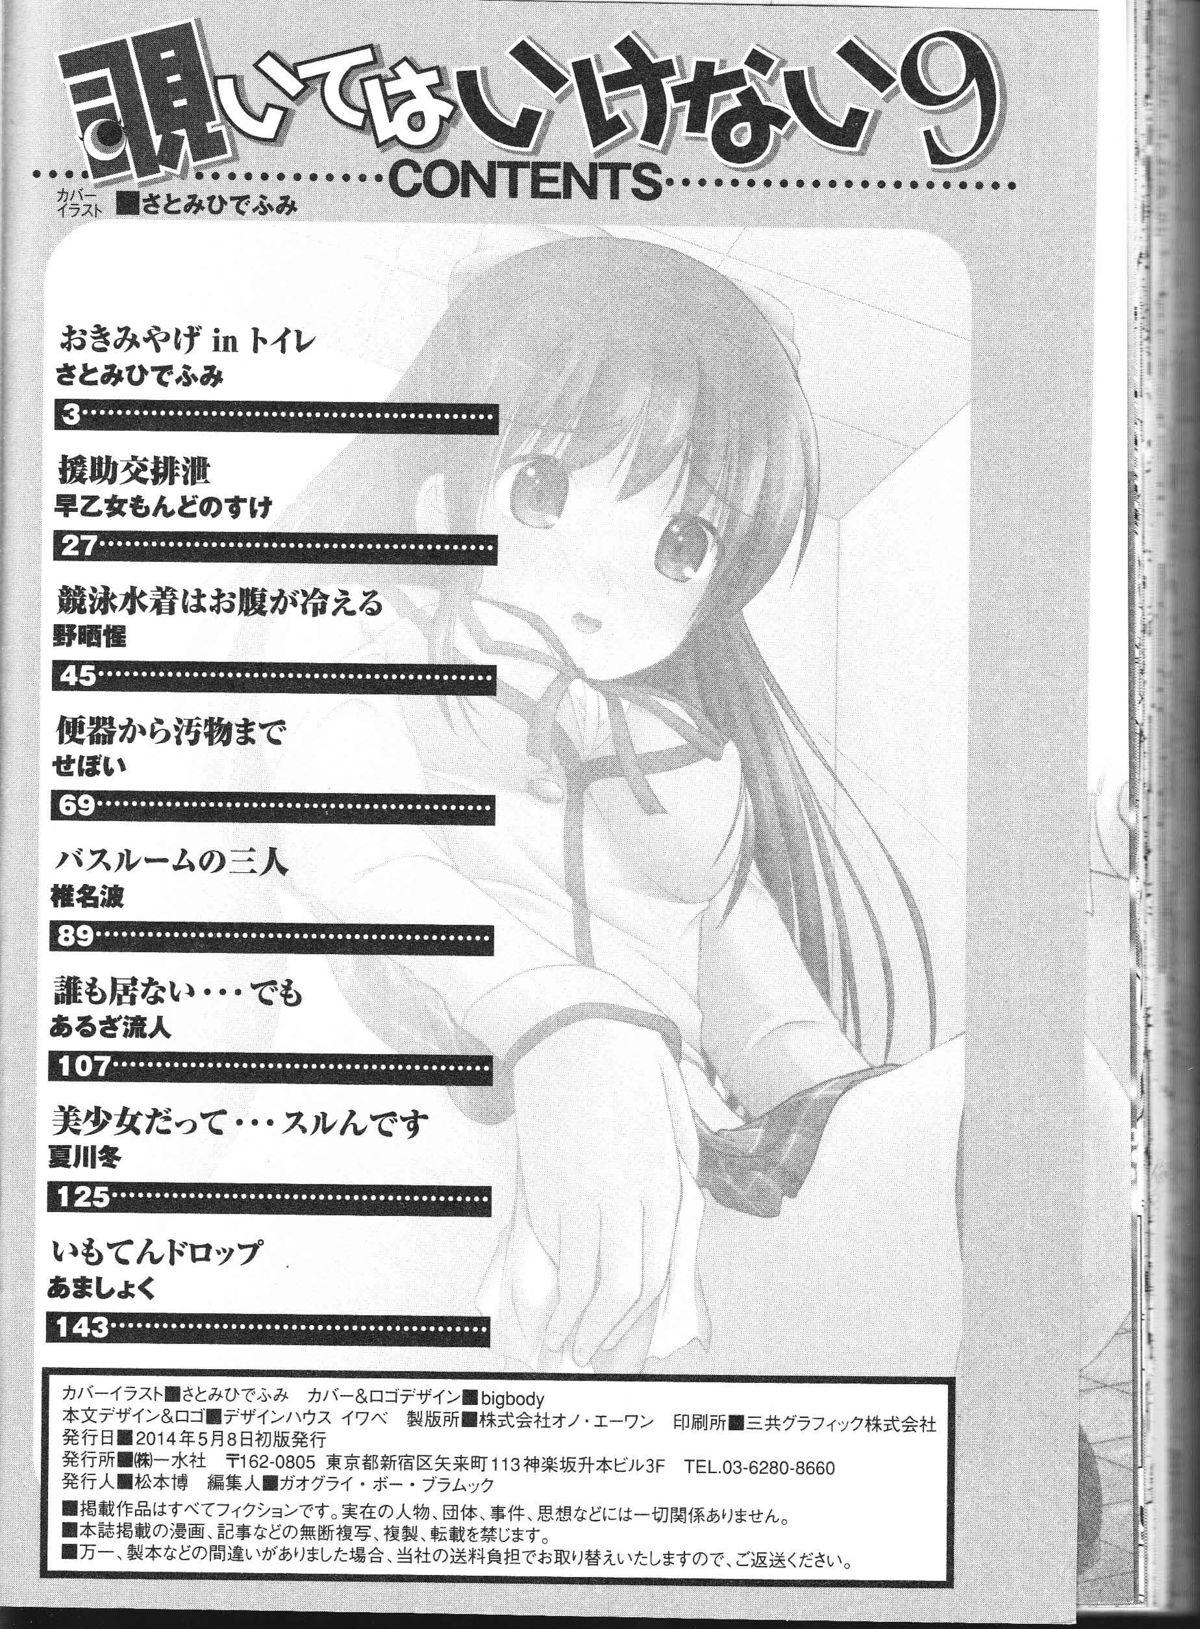 Family Porn Nozoite wa Ikenai 9 - Do Not Peep! 9 Large - Page 163